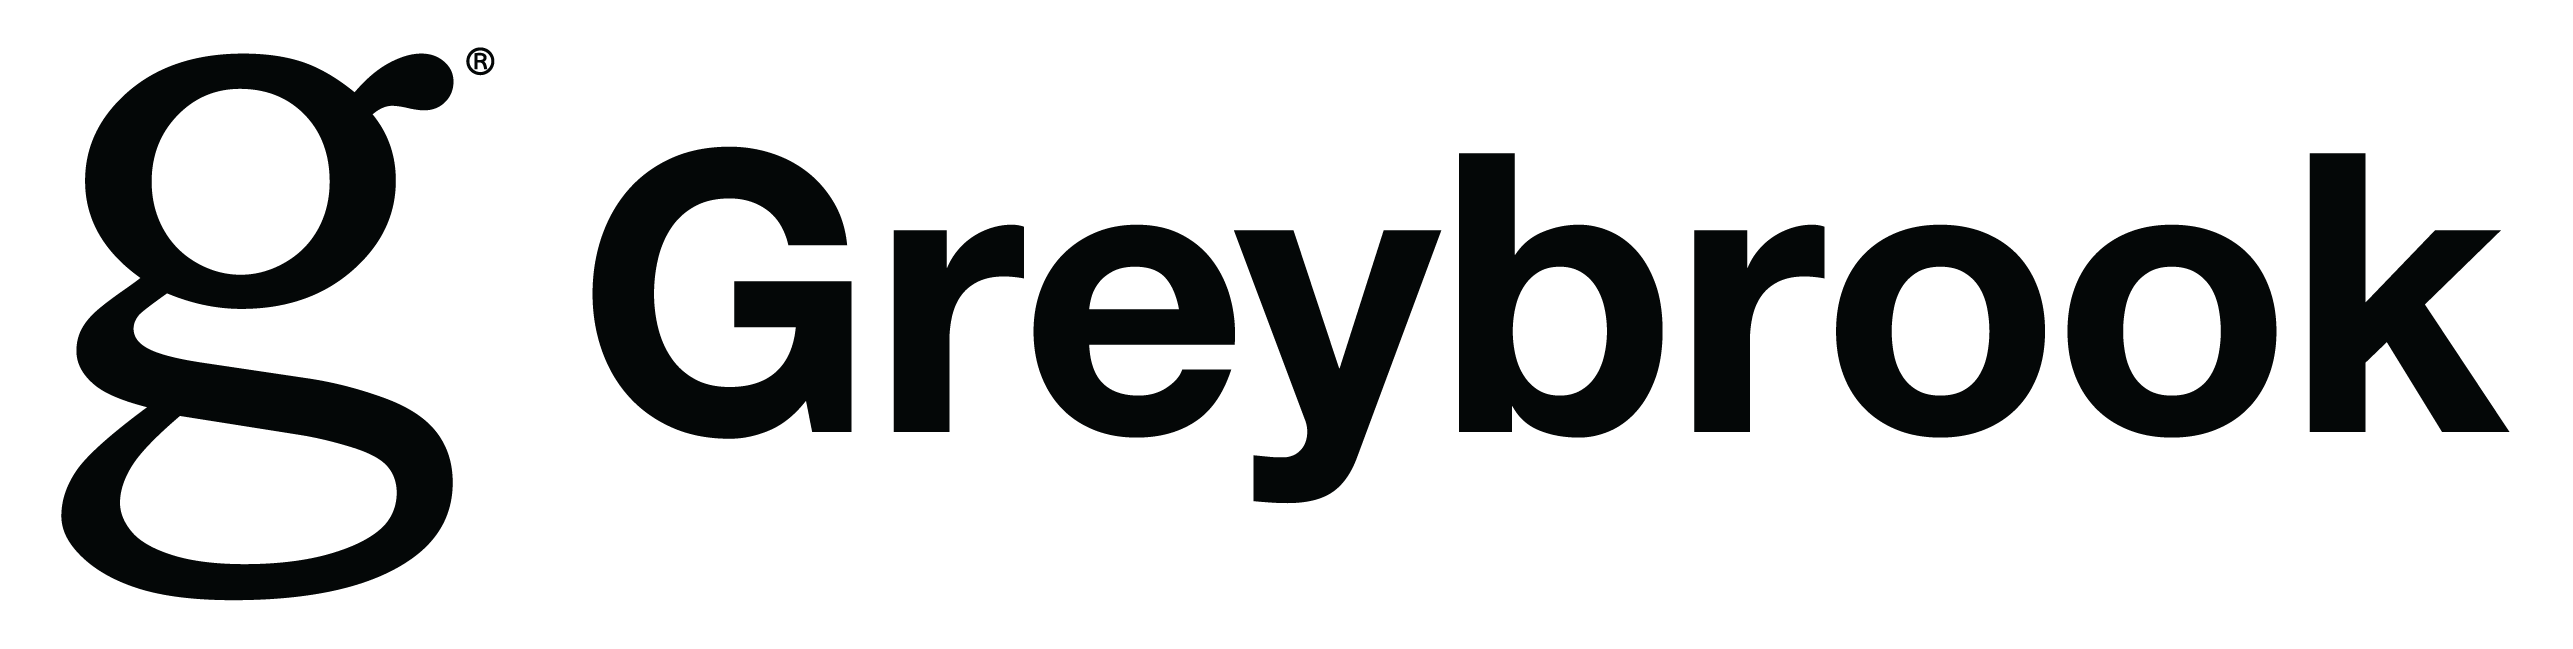 Greybrook Logo - Black